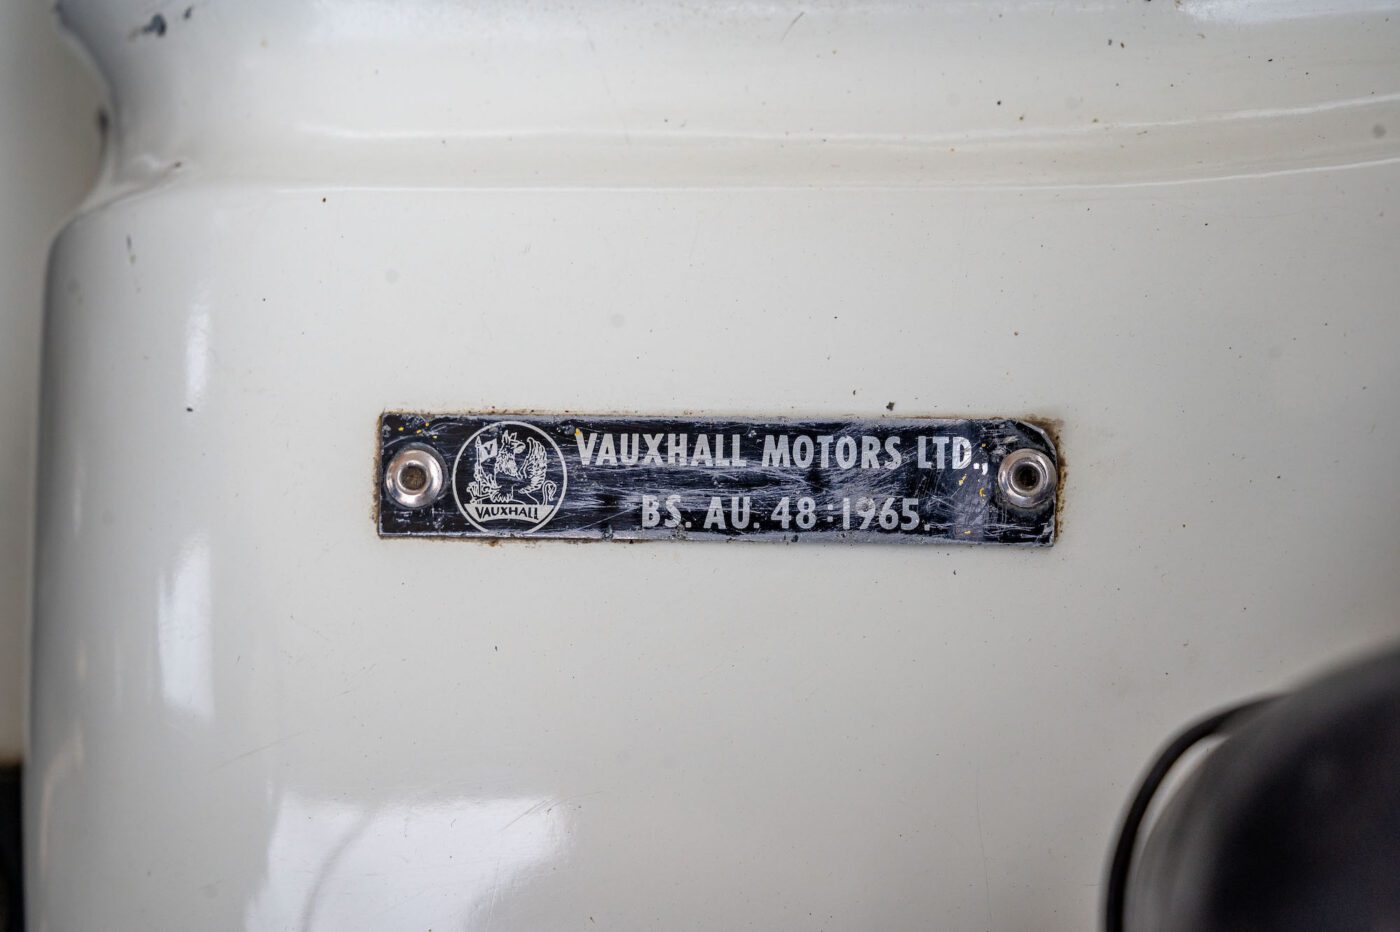 Vauxhall Viva GT identification plate